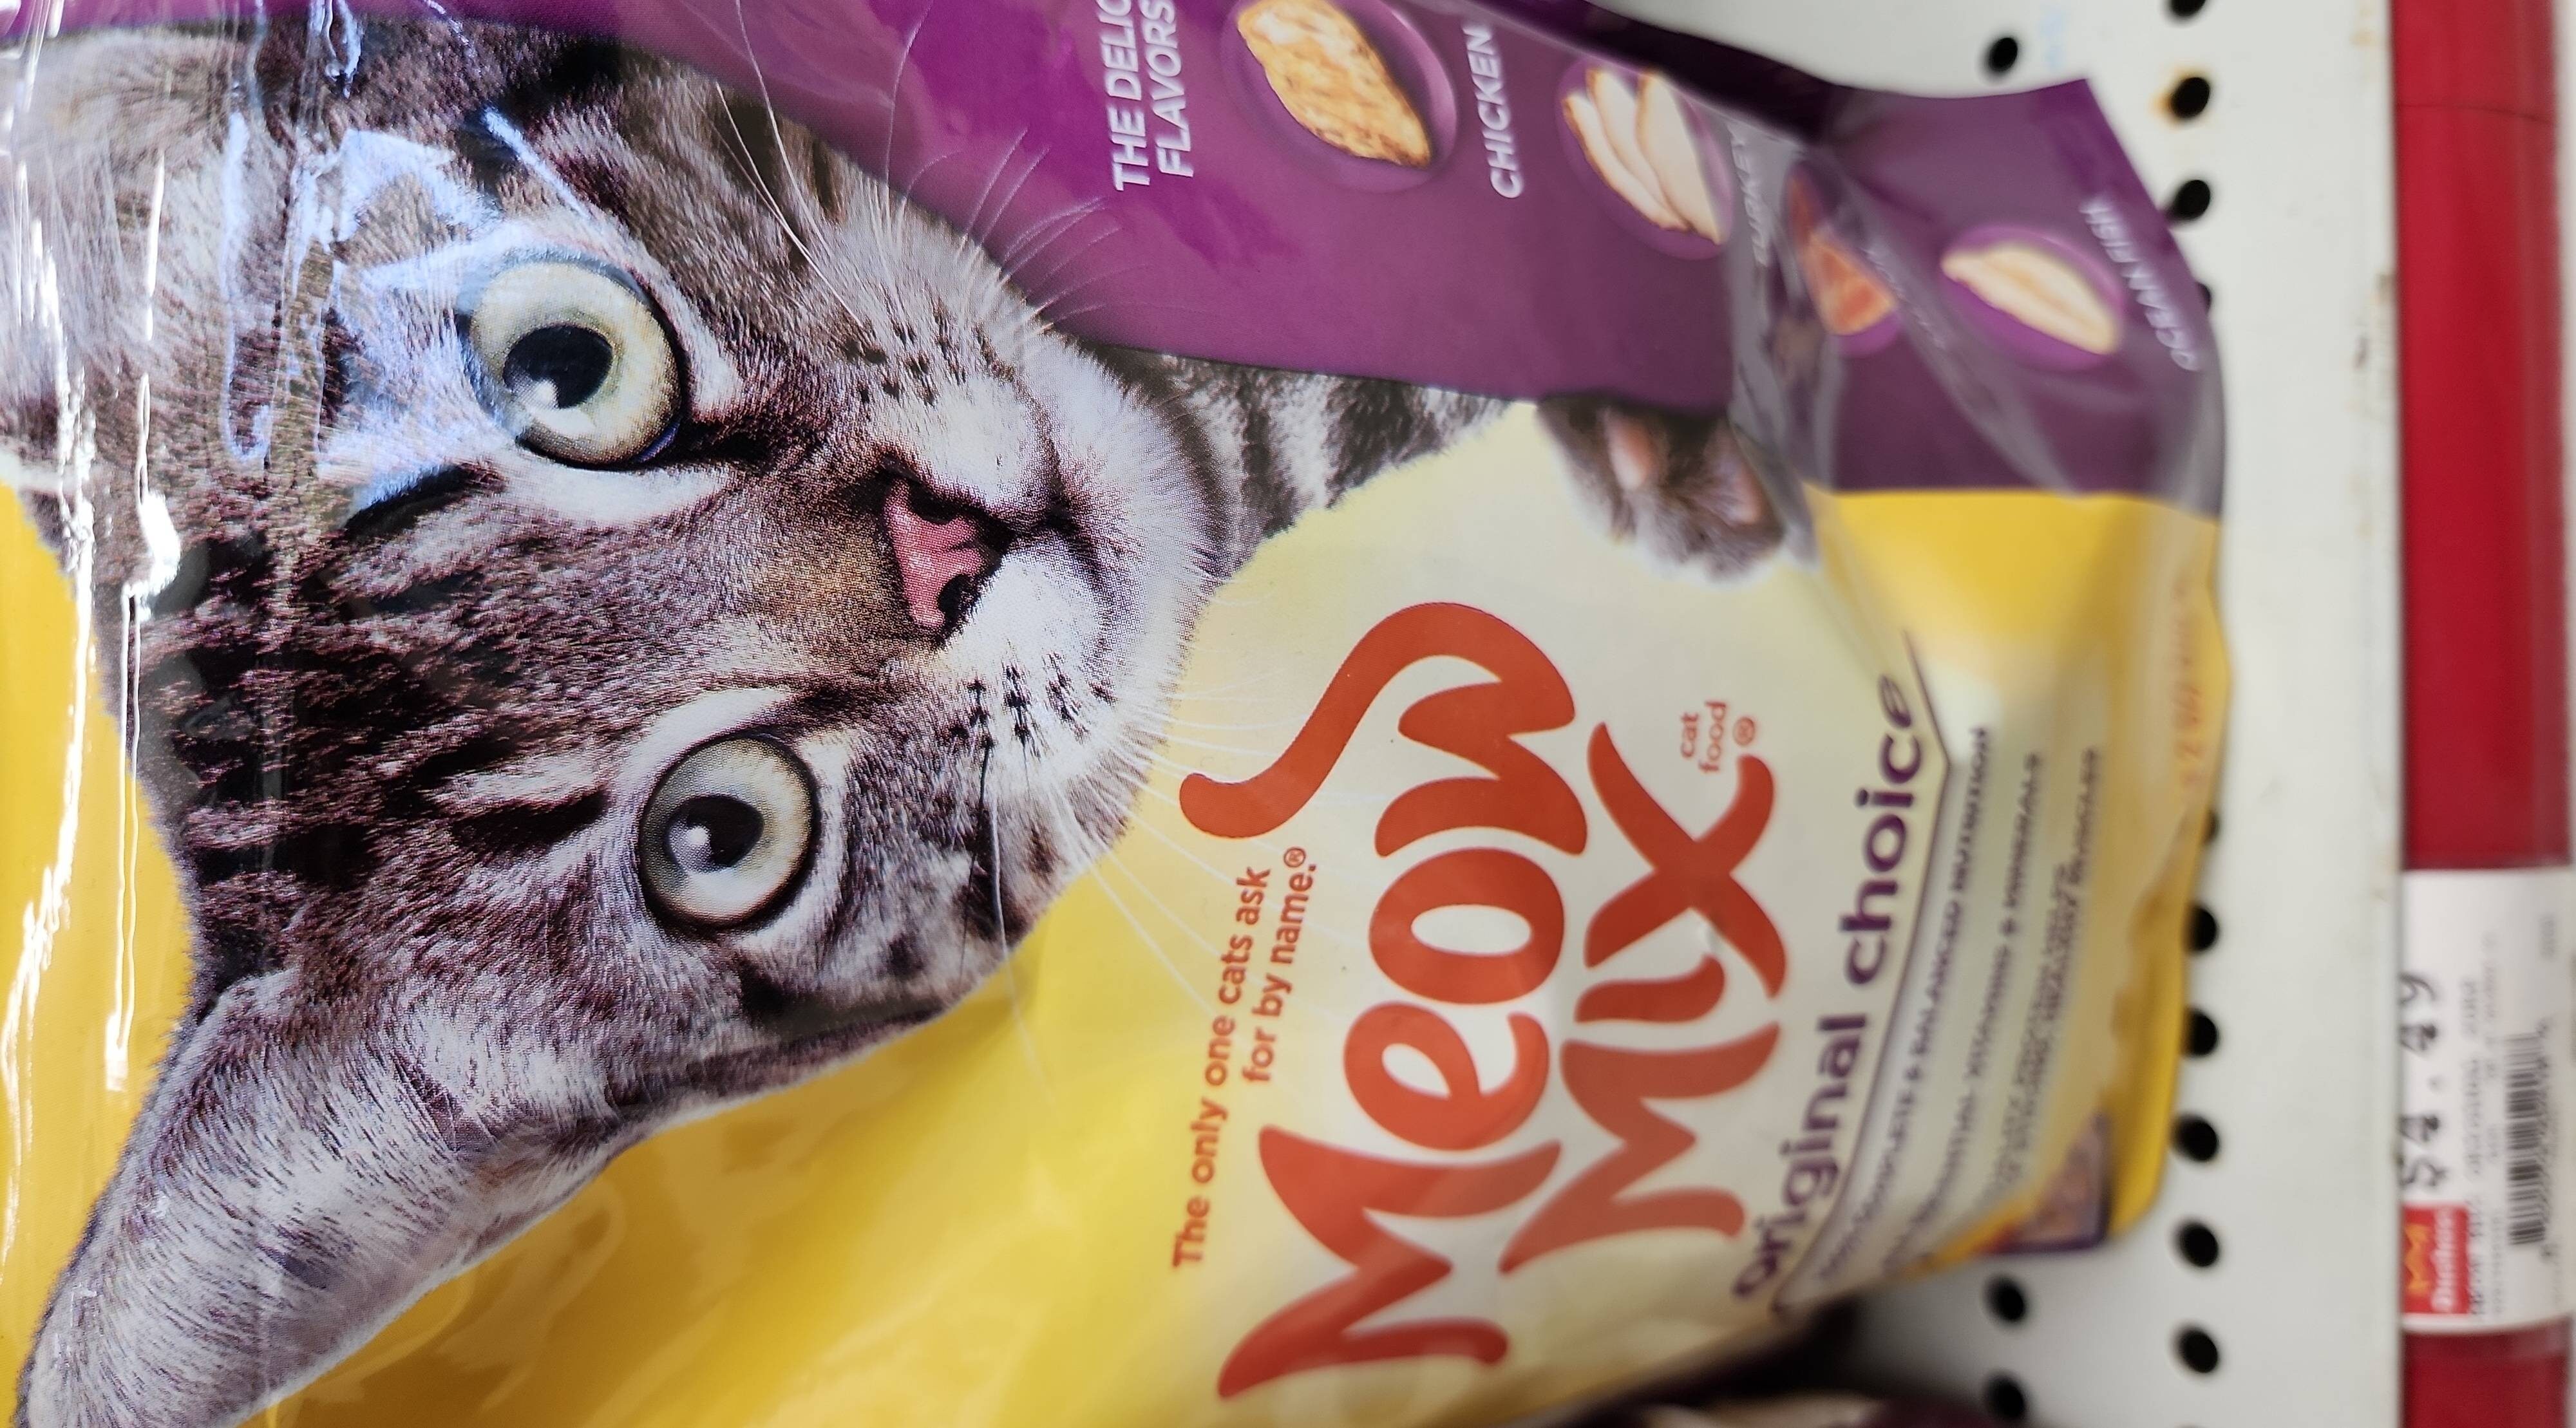 Meow mix - Product - en